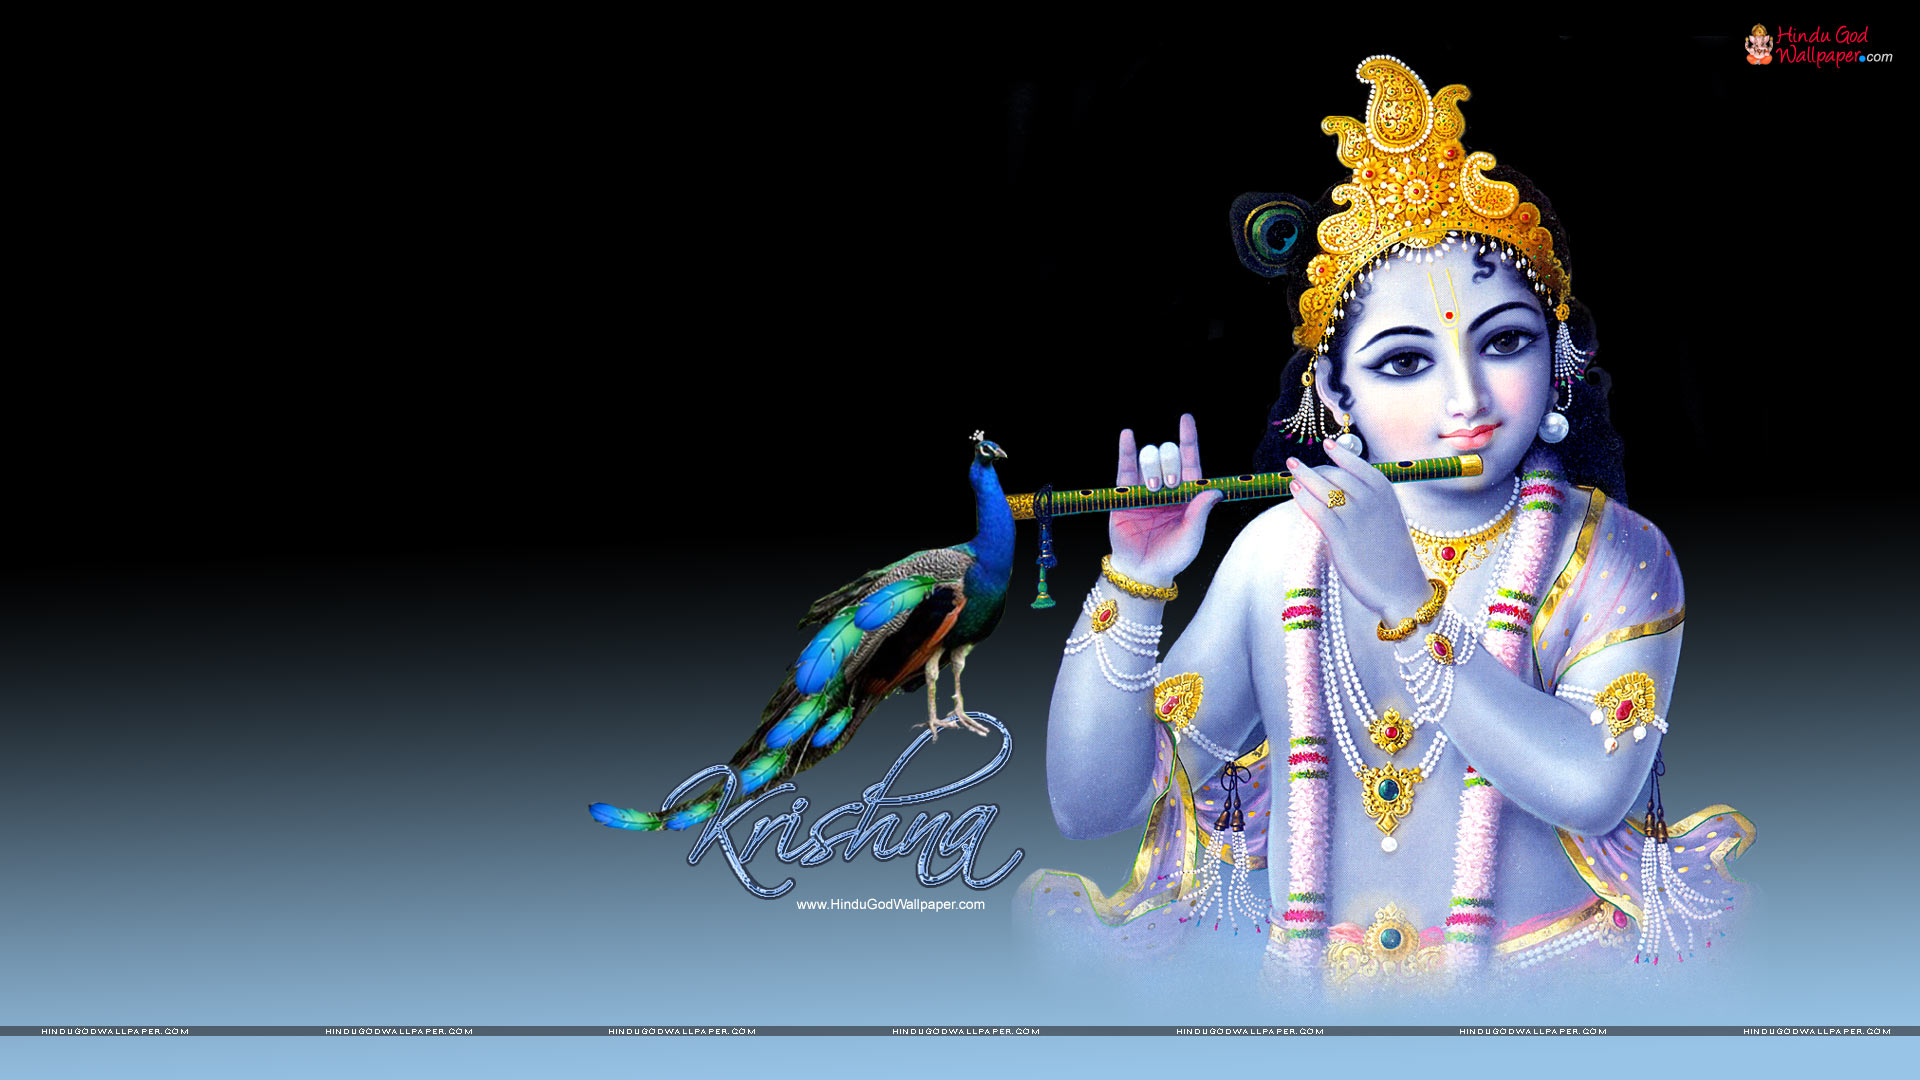 bal krishna images and wallpaper Download